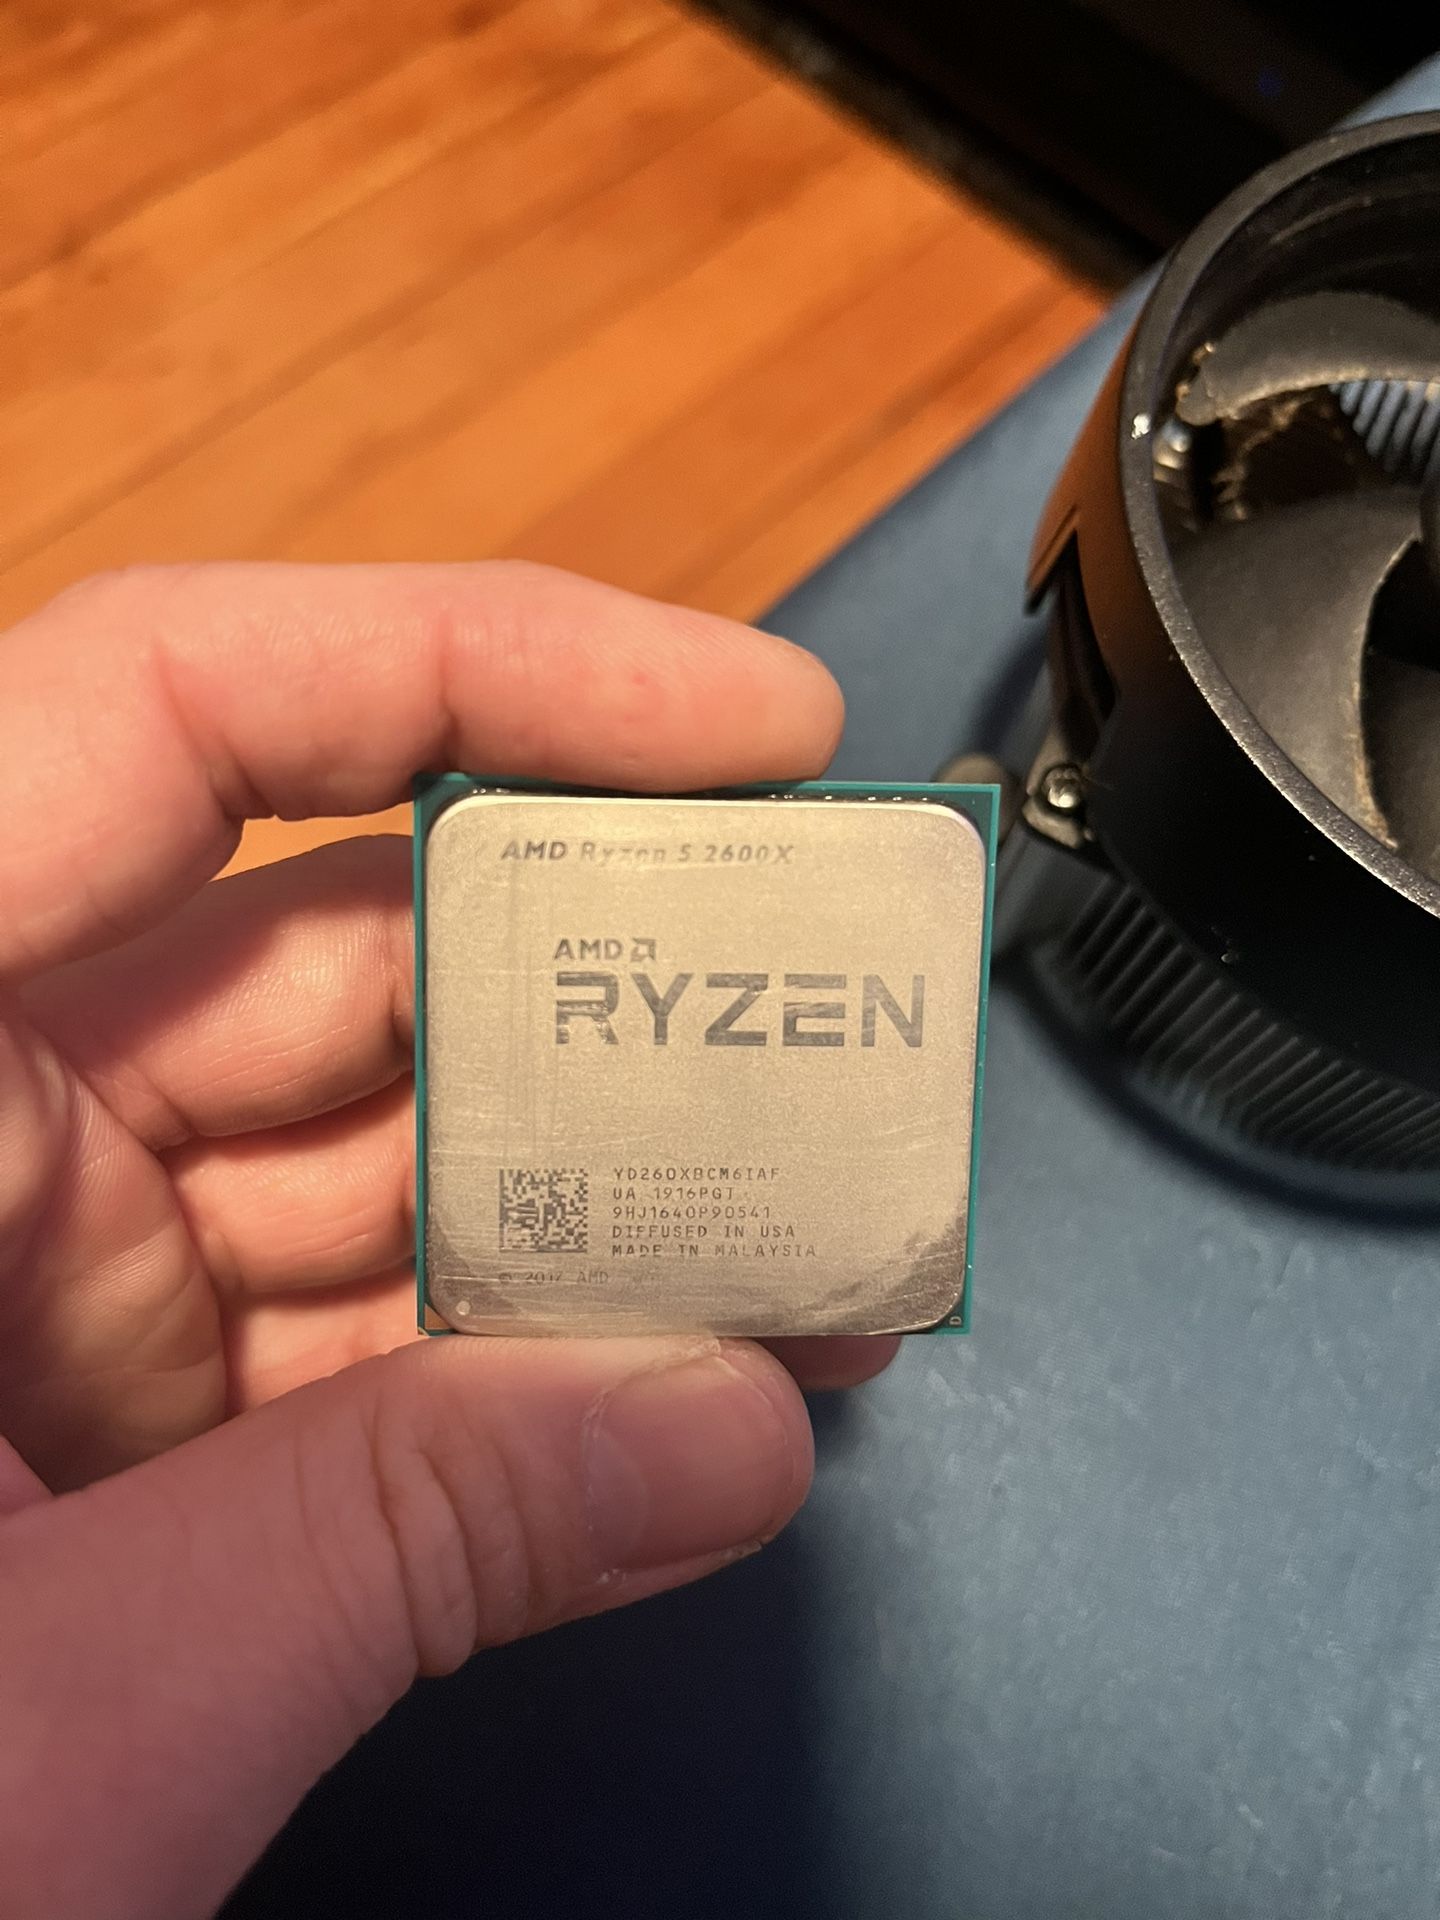 AMD Ryzen 5 2600x With Heat sink cooler